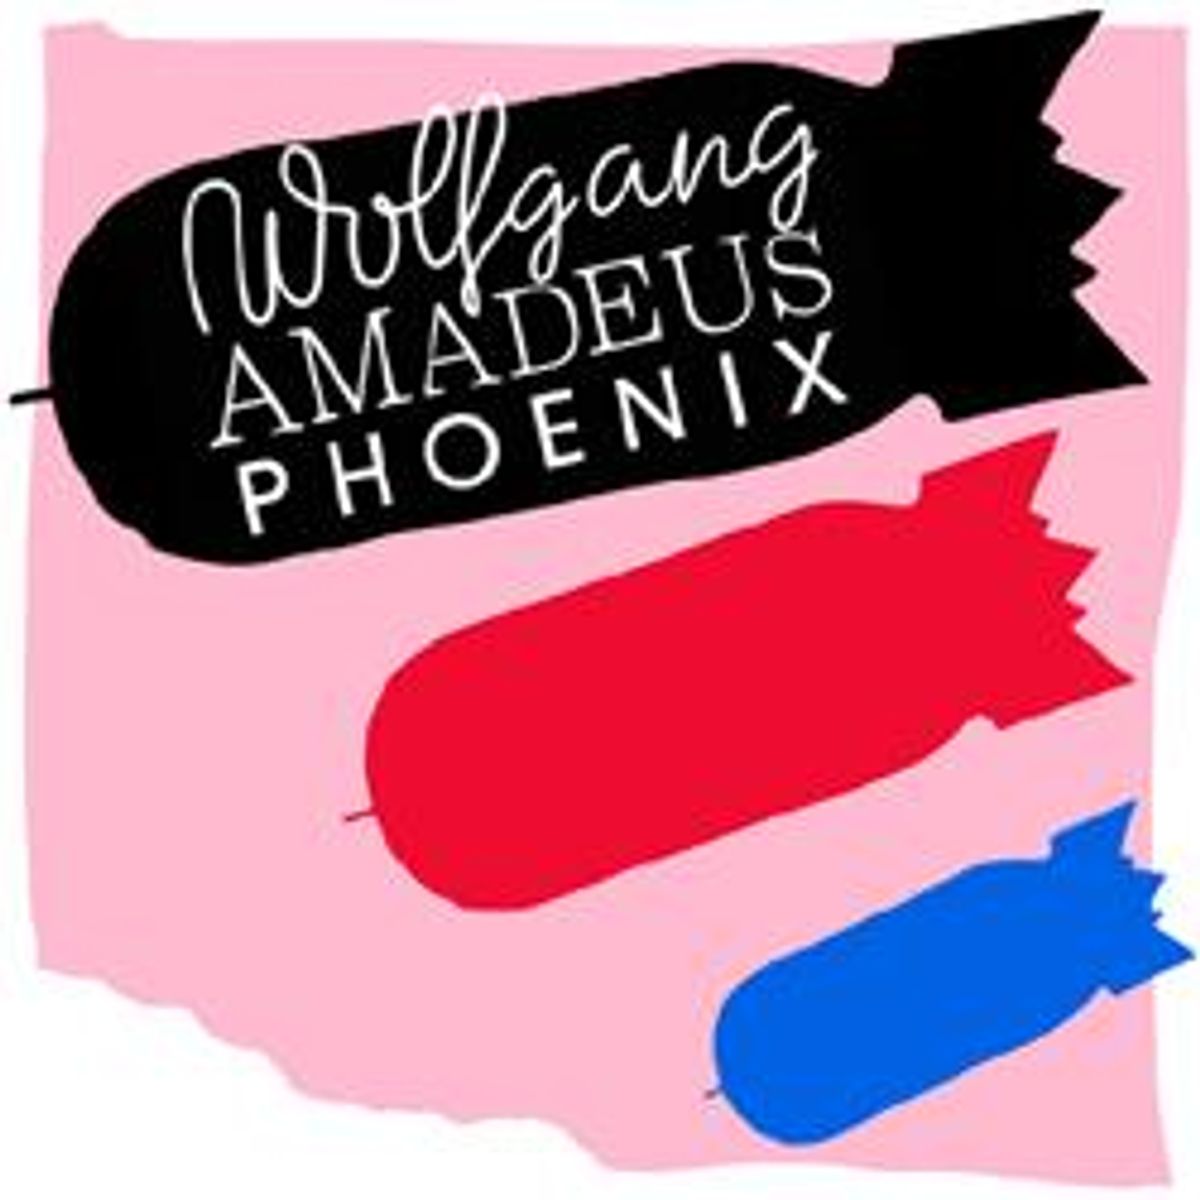 Wolfgang_amadeus_phoenix_cover